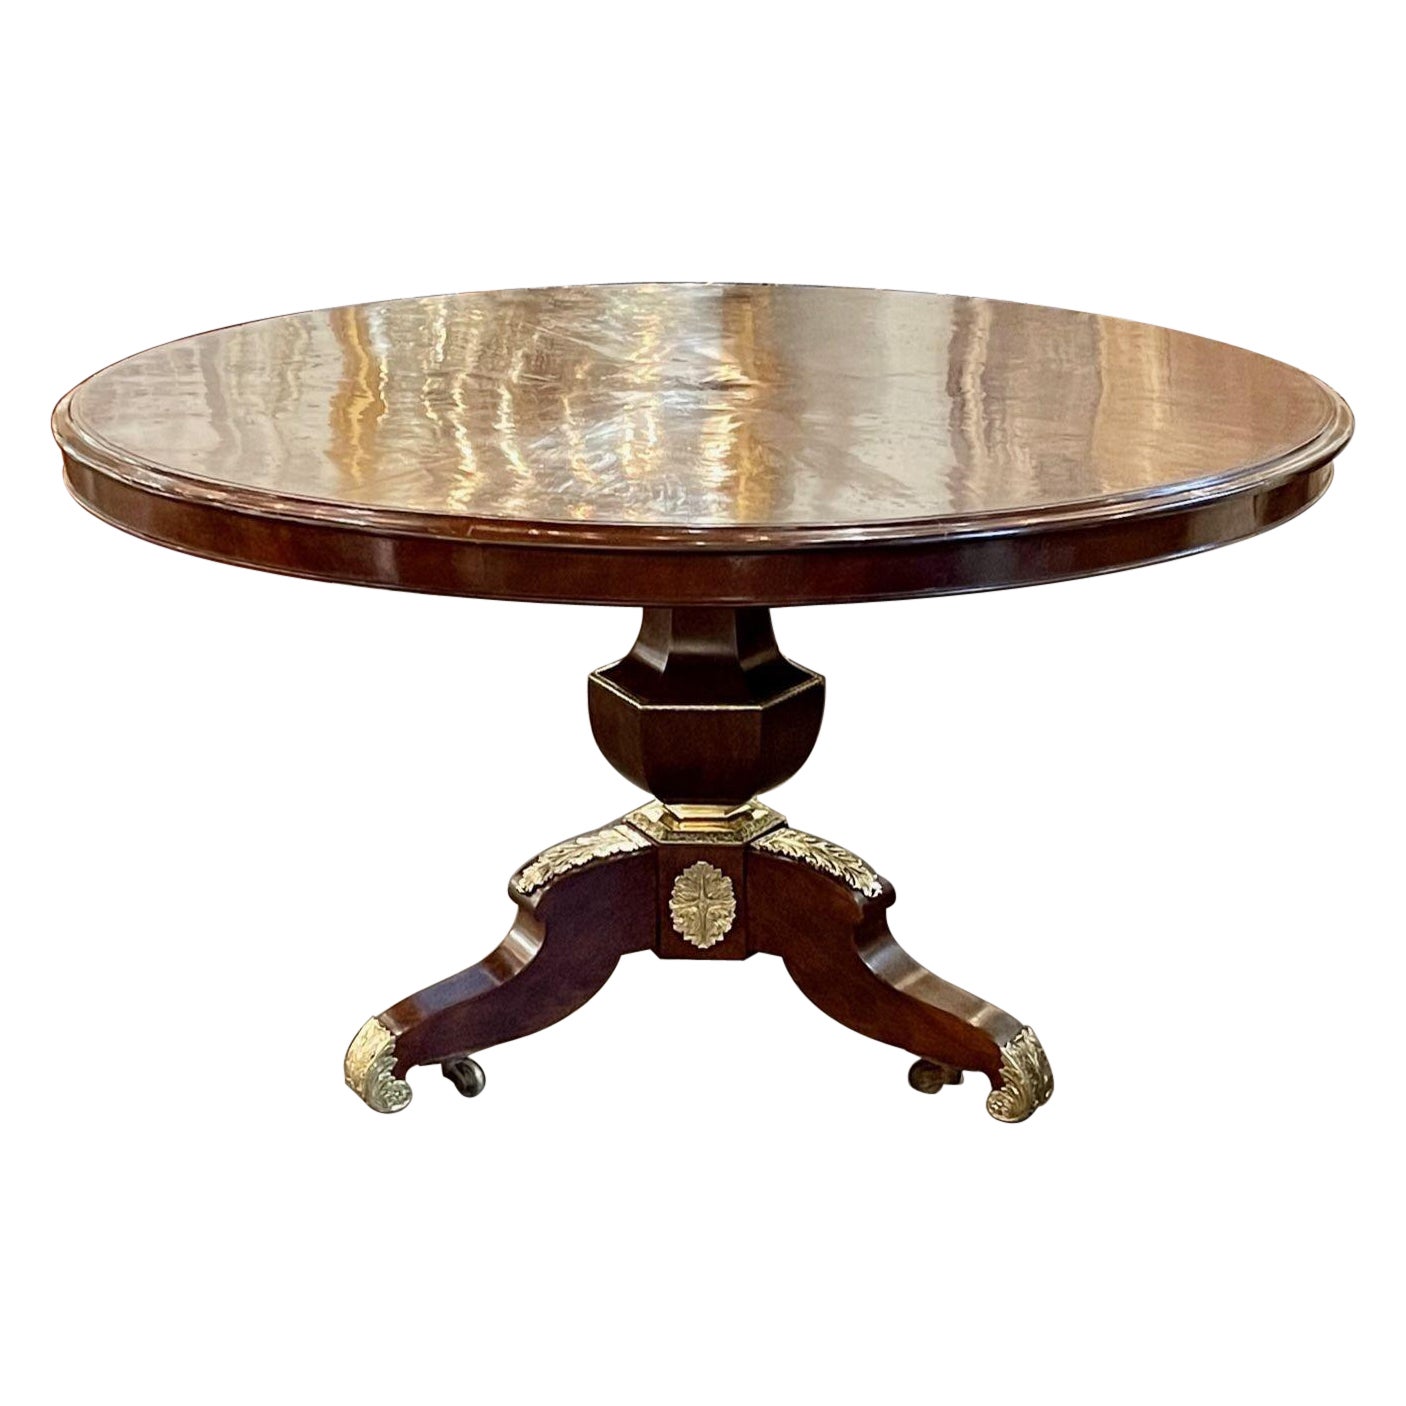 19th Century English Regency Mahogany and Gilt Bronze Mounted Center Table